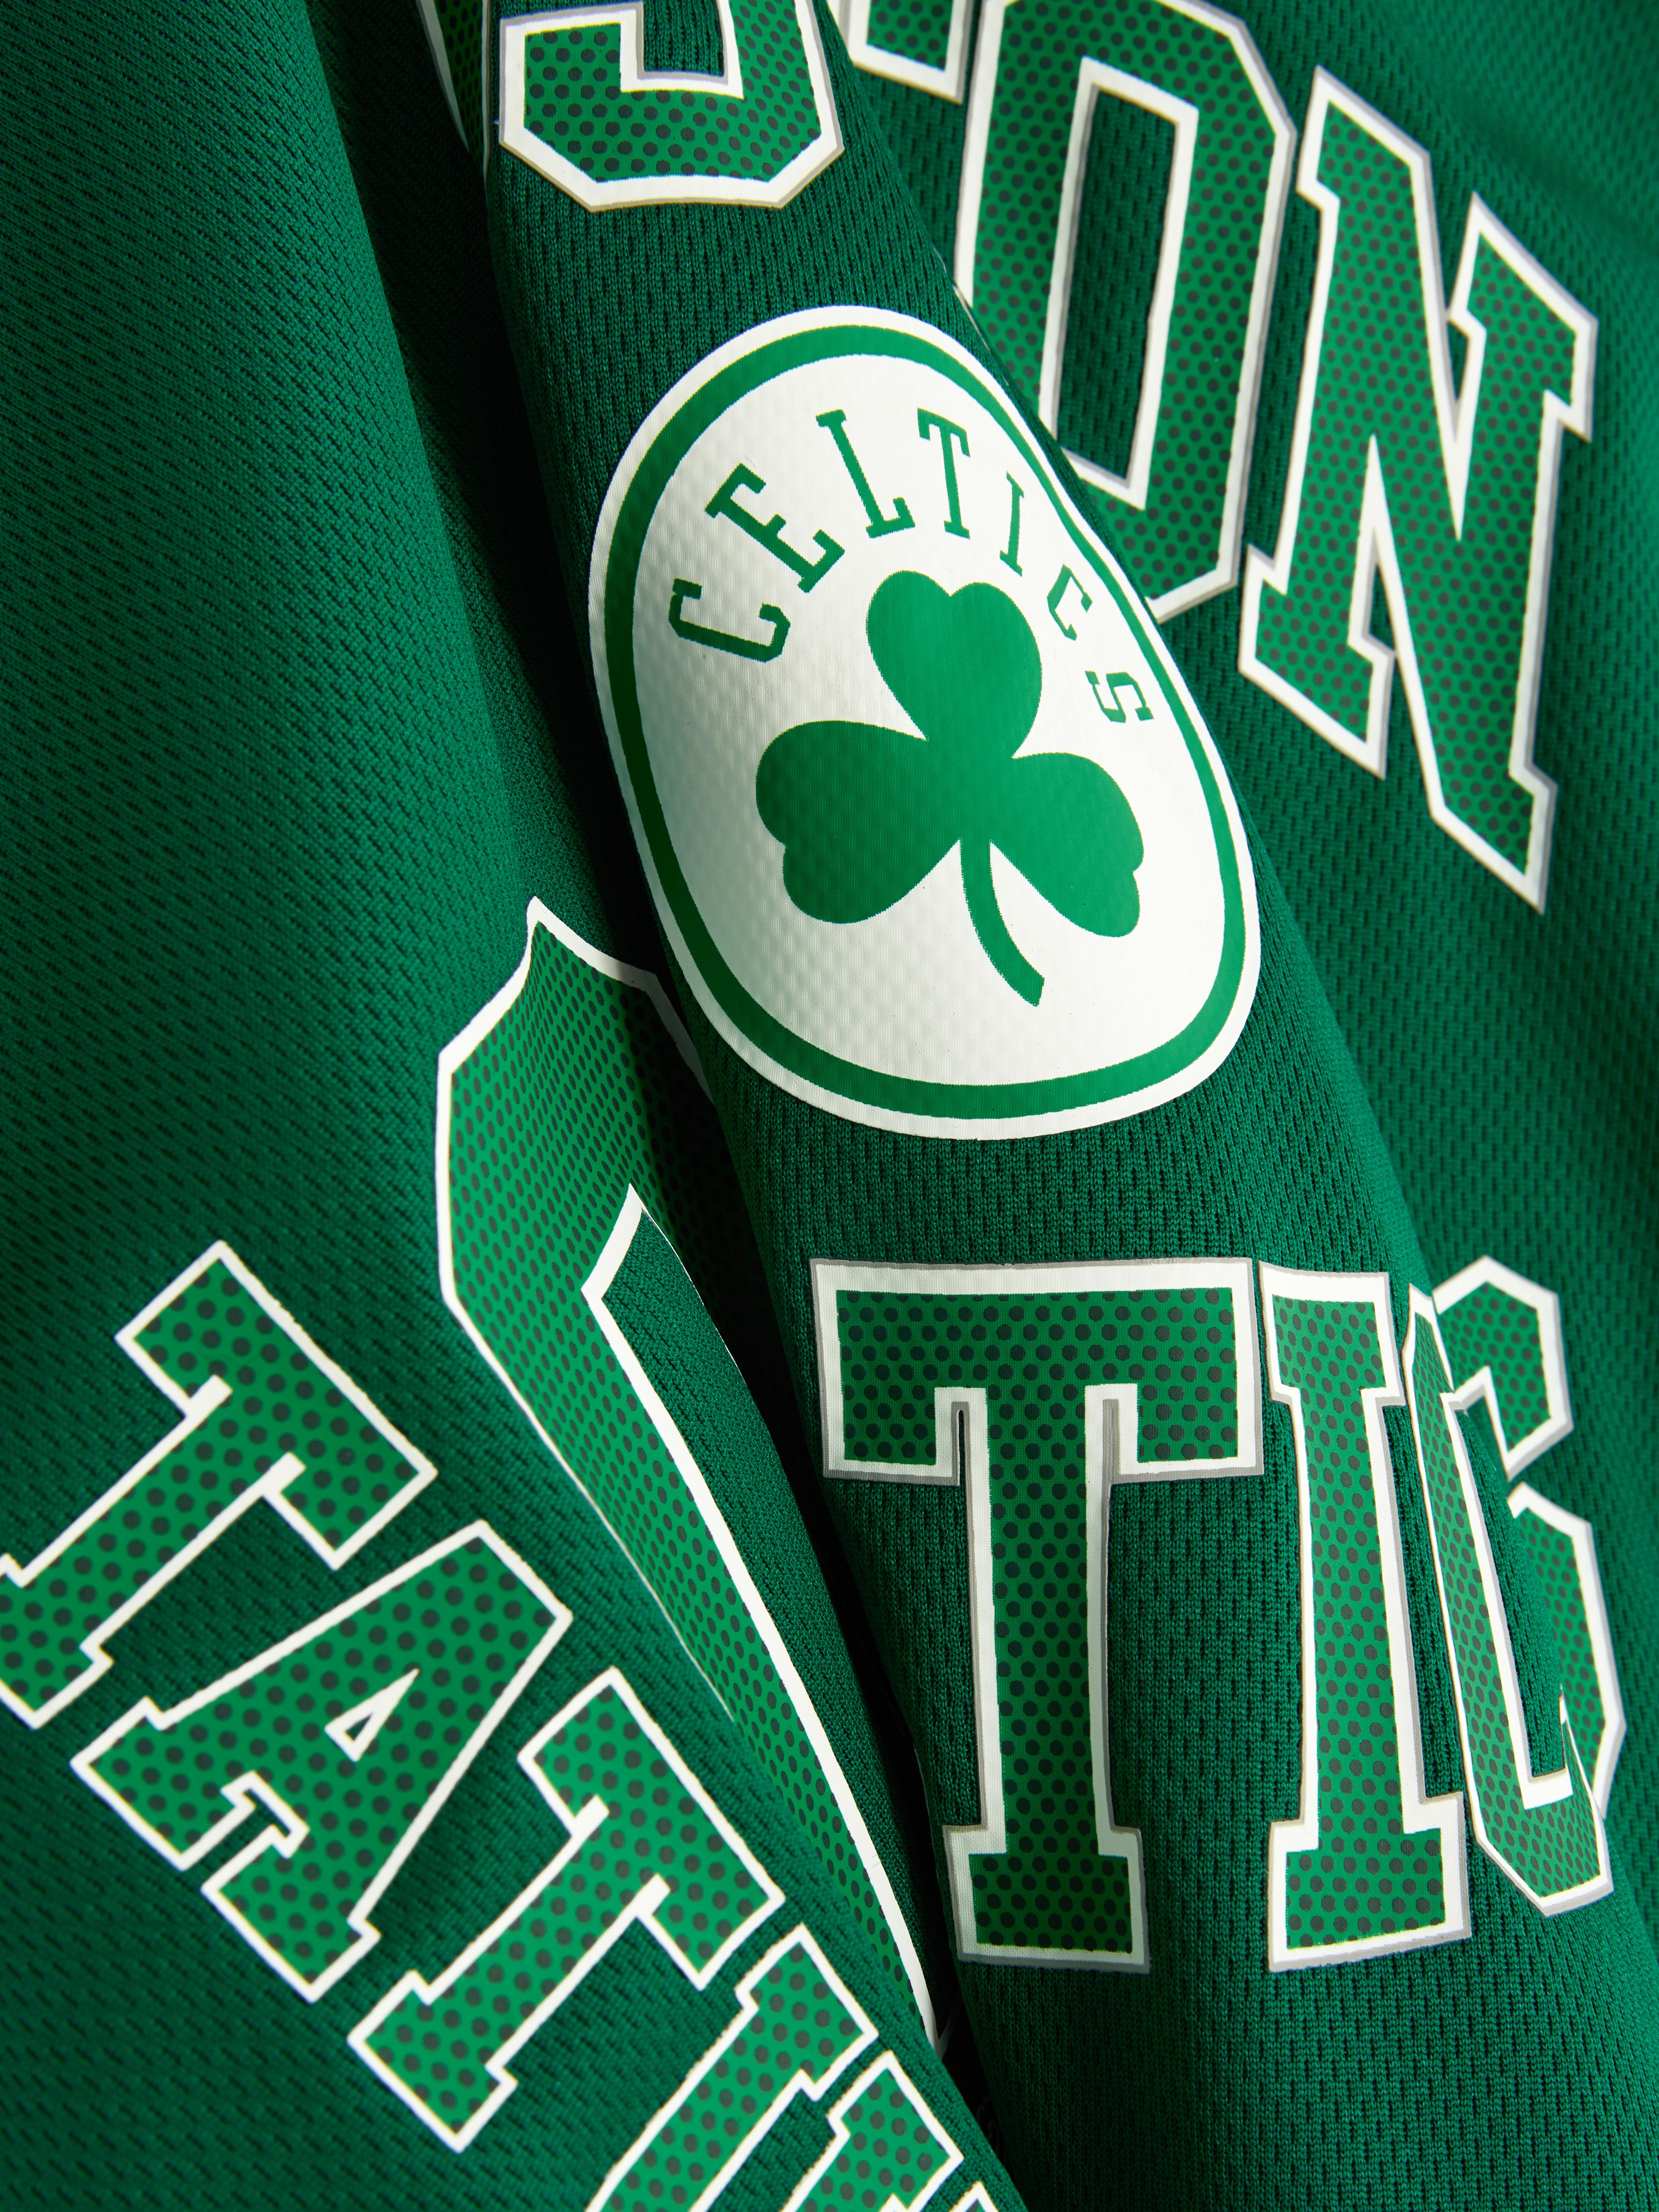 Men Basketball Tights NBA Boston Celtics Green